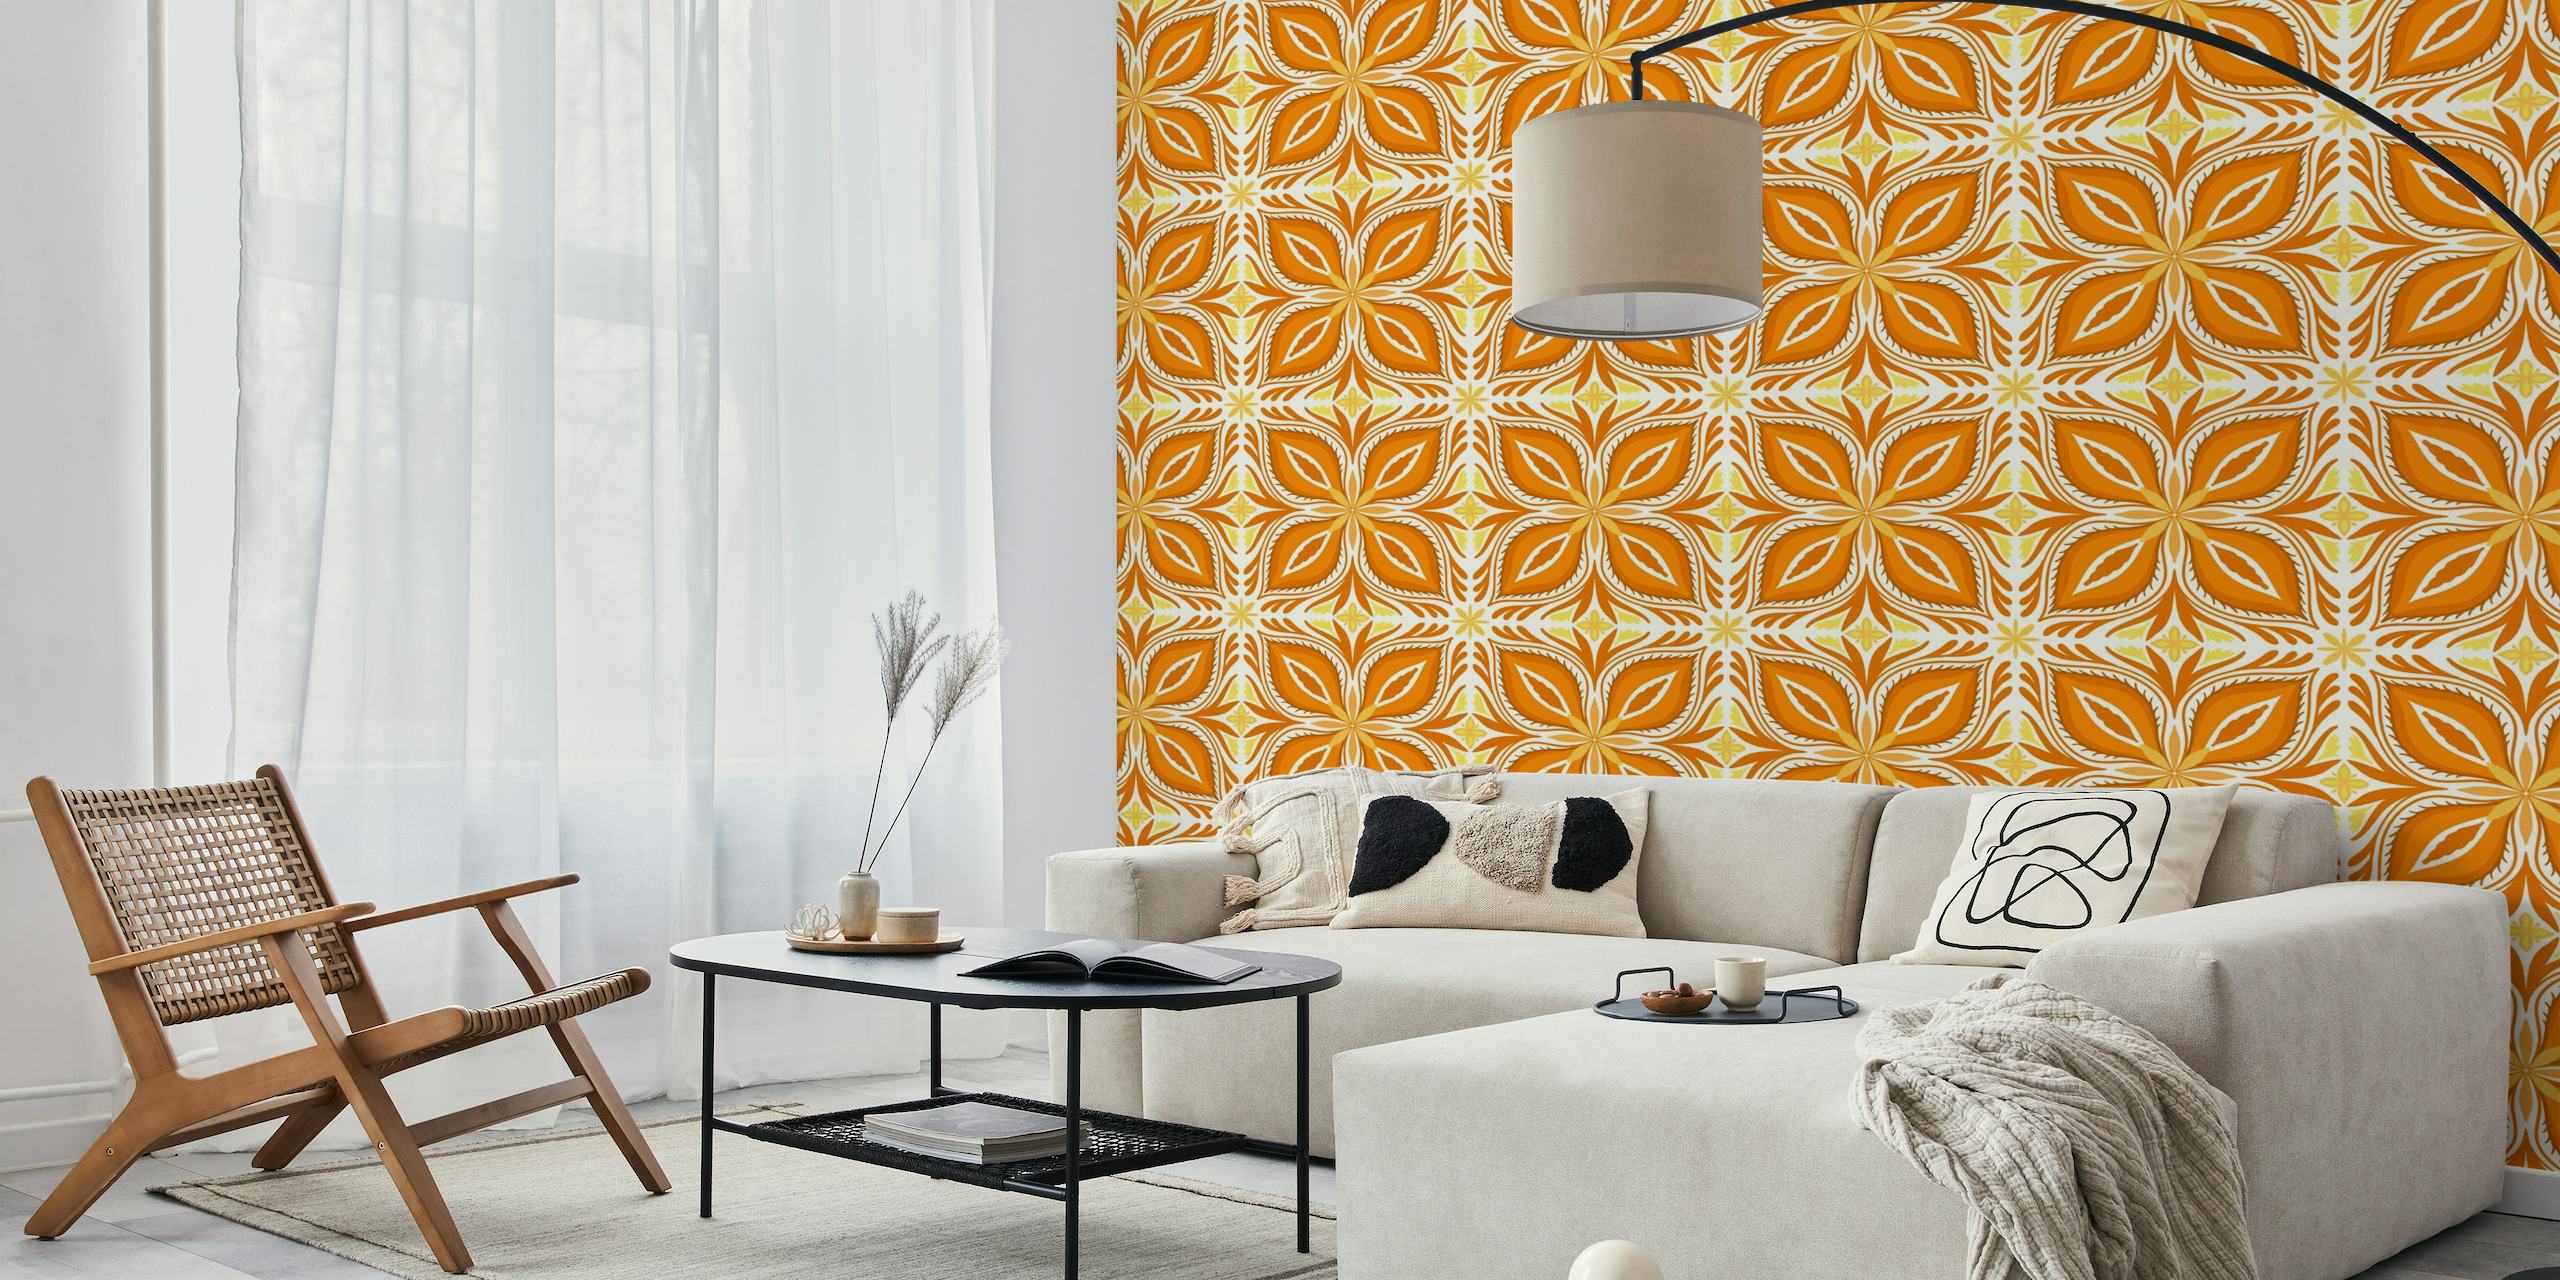 Ornate tiles, yellow and orange 7 behang